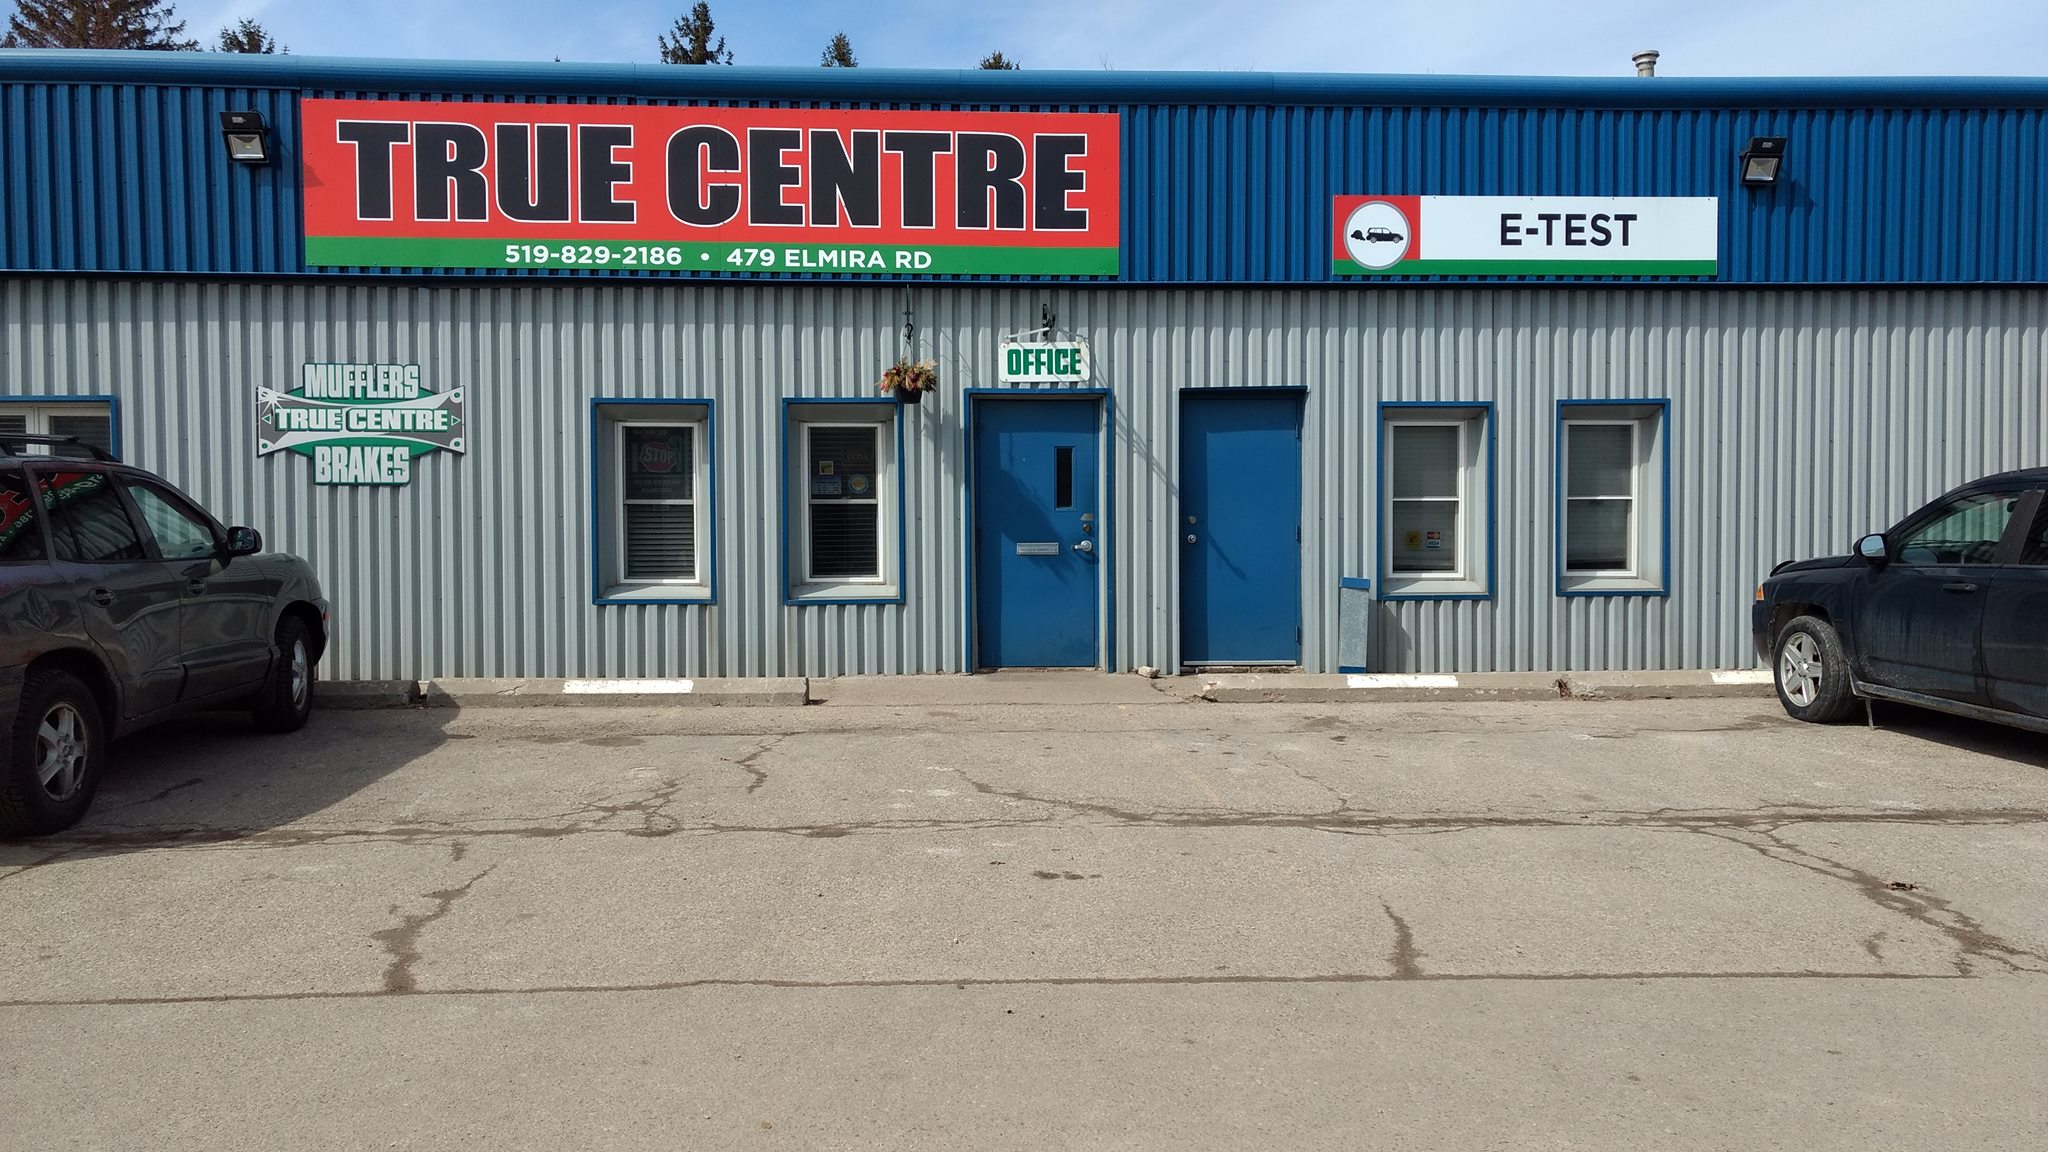 True Centre Automotive Services: Guelph Auto - Repair and Service